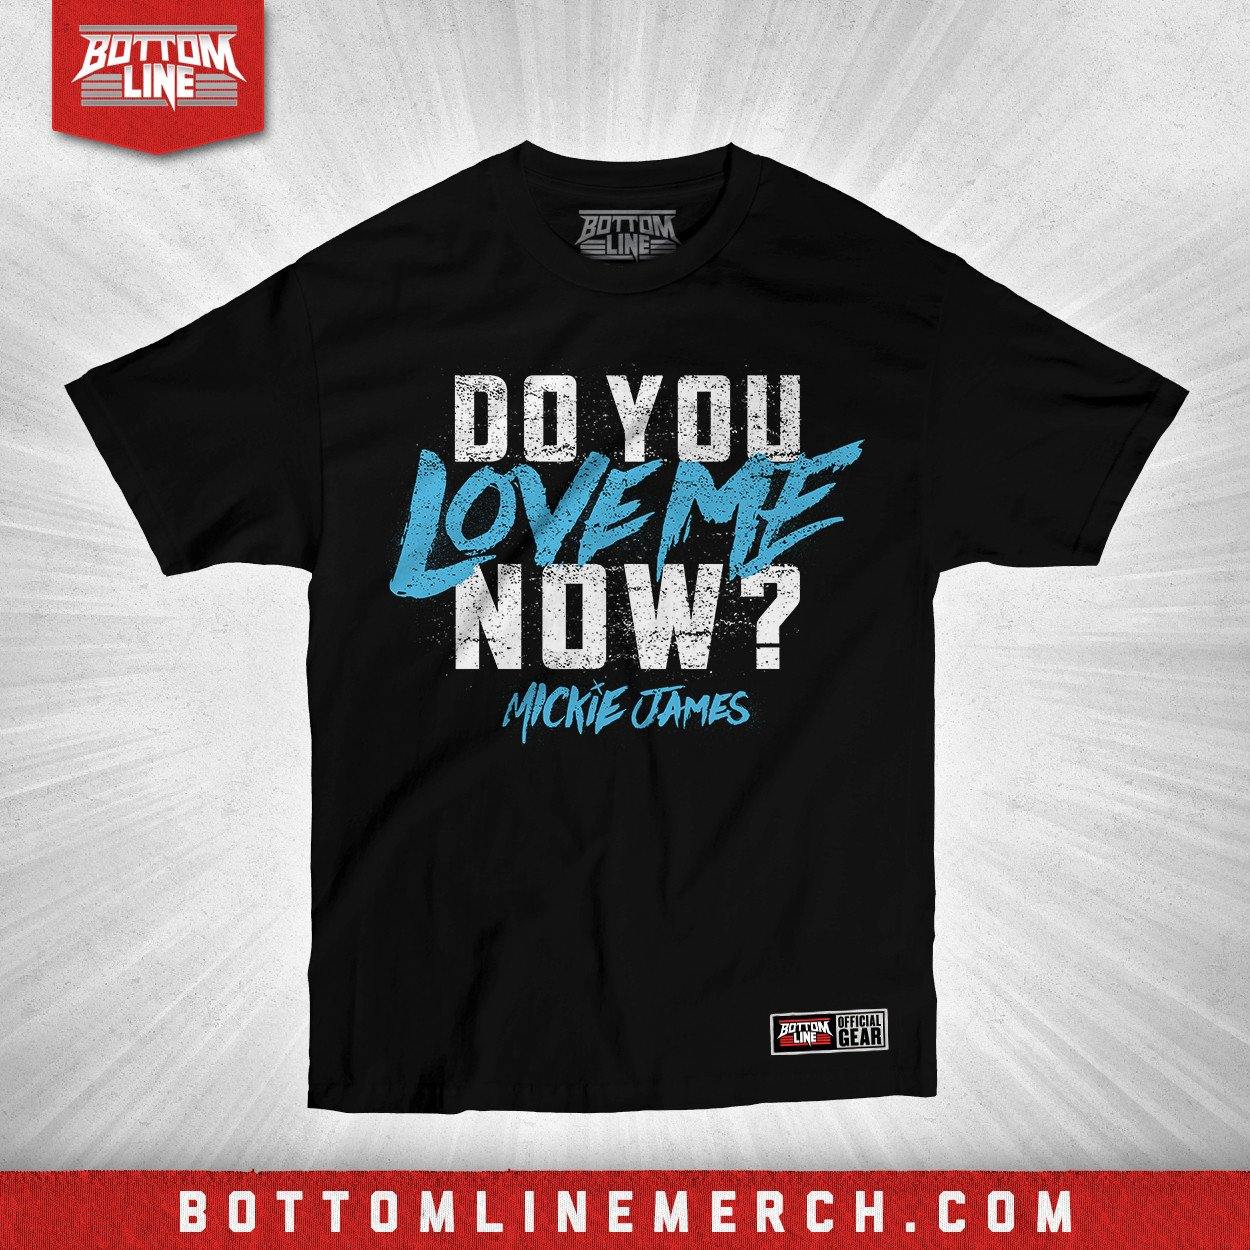 Buy Now – Mickie James "Do You Love Me Now" Shirt – Wrestler & Wrestling Merch – Bottom Line